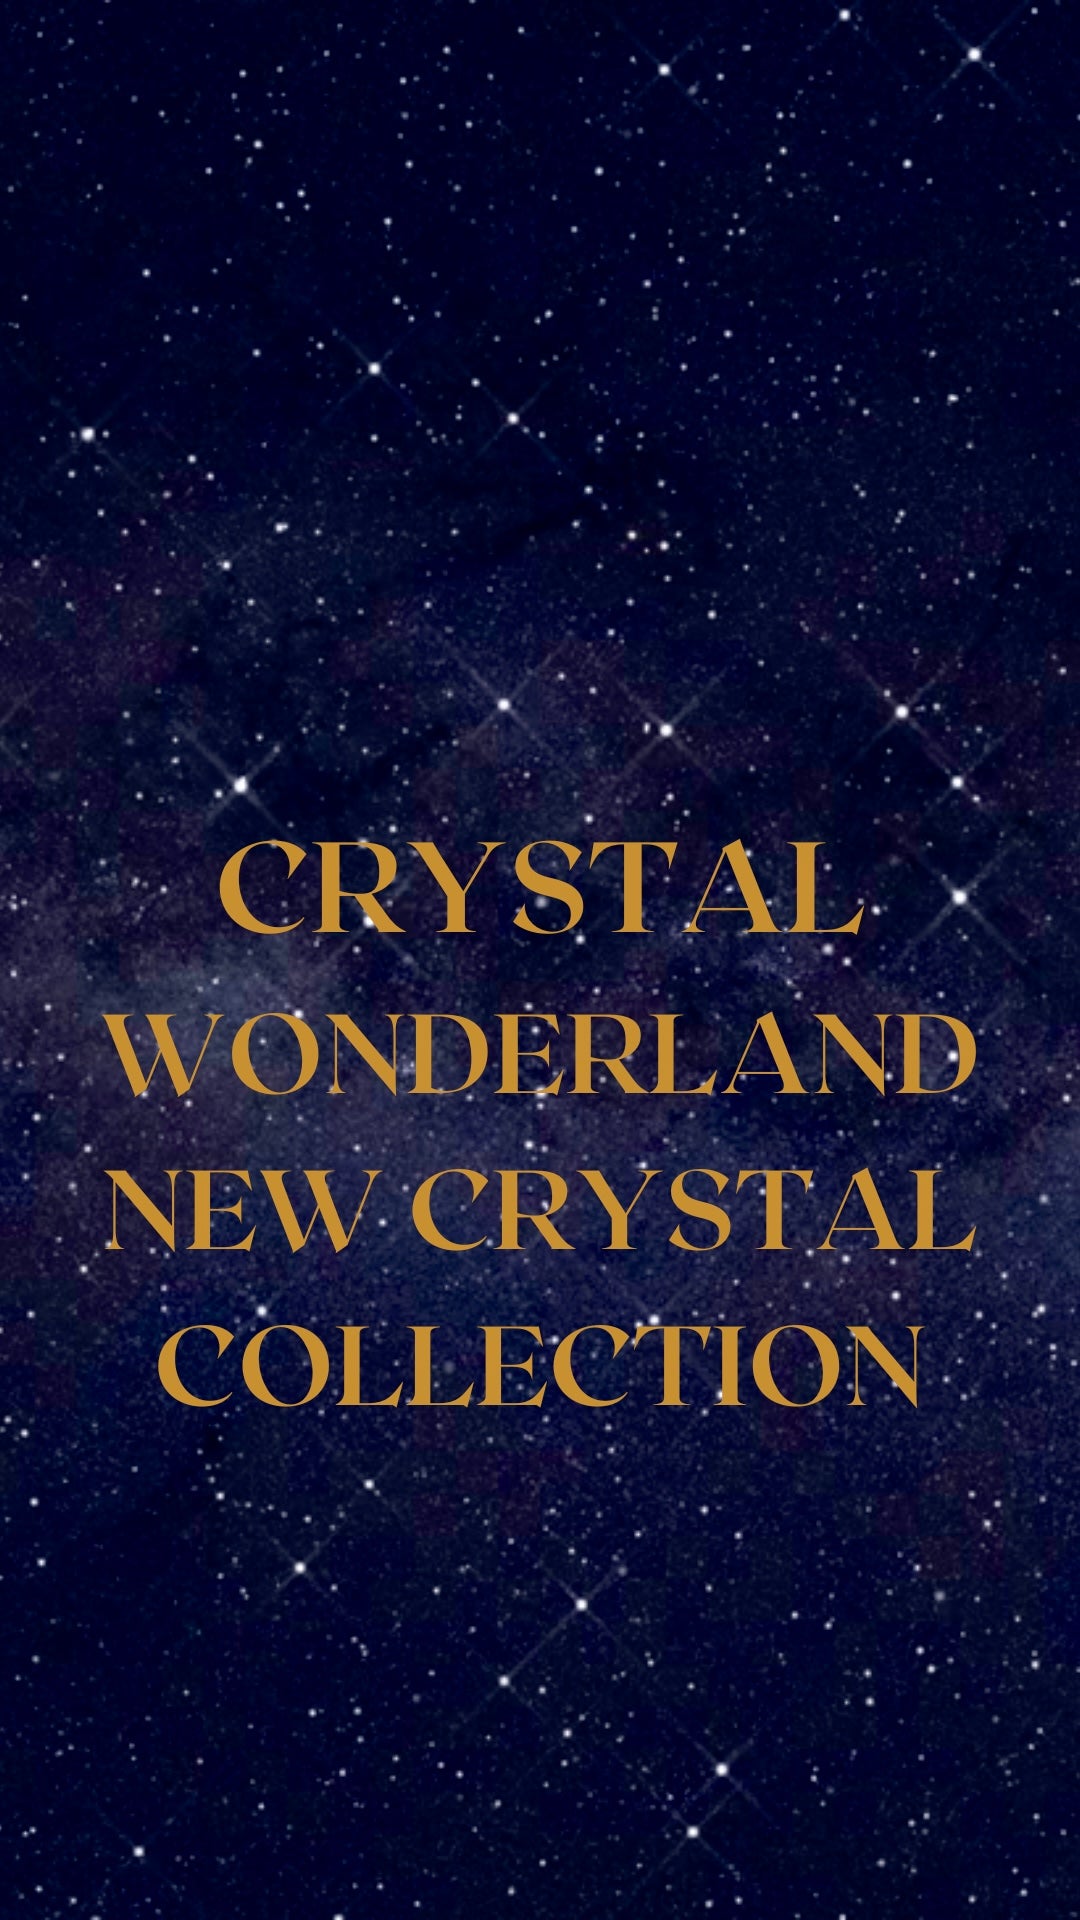 Crystal Wonderland Zodiac Crystal Set Libra